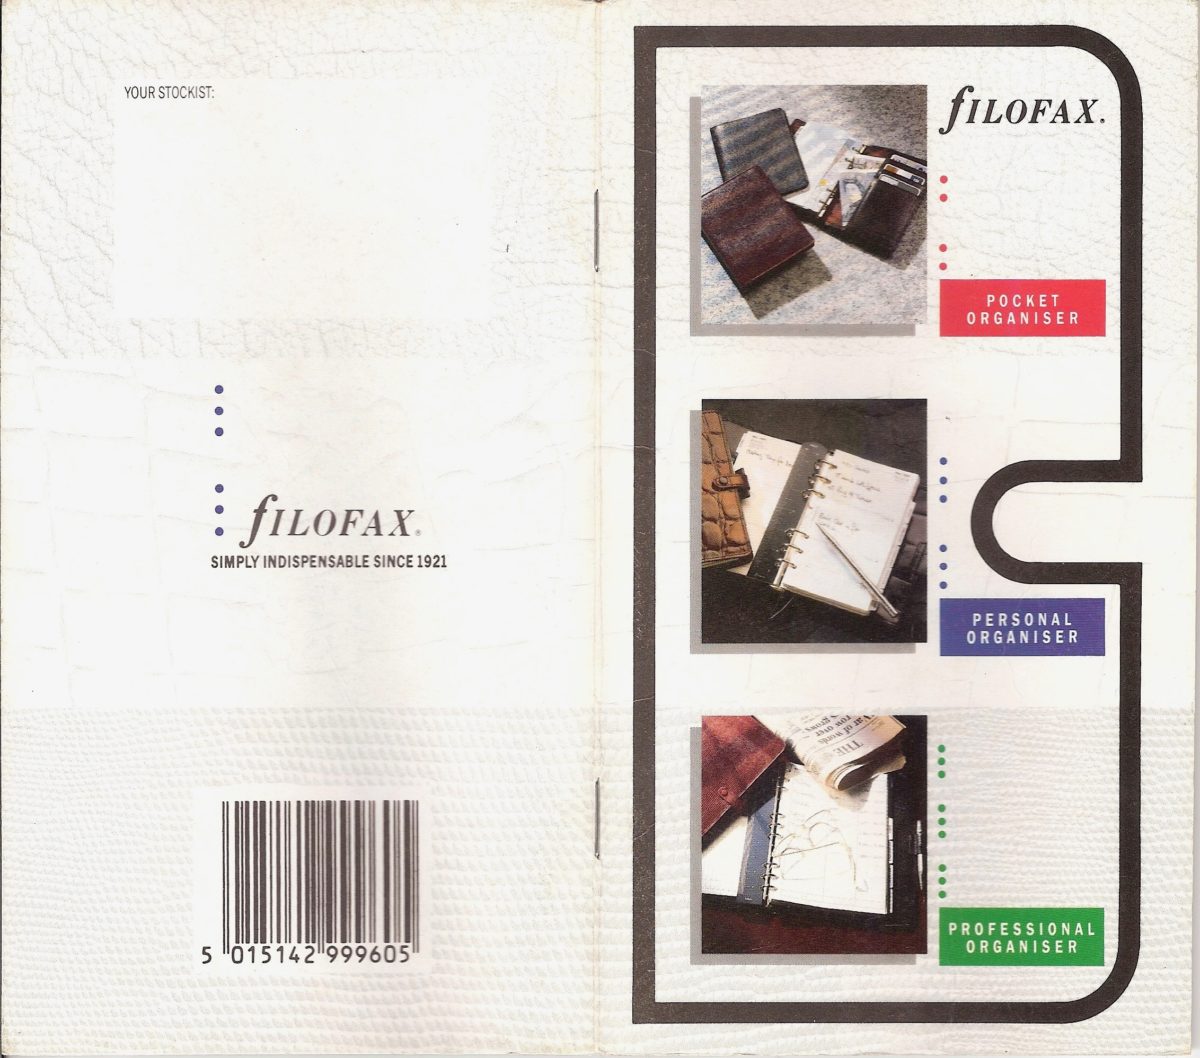 Filofax UK full catalogue 1989